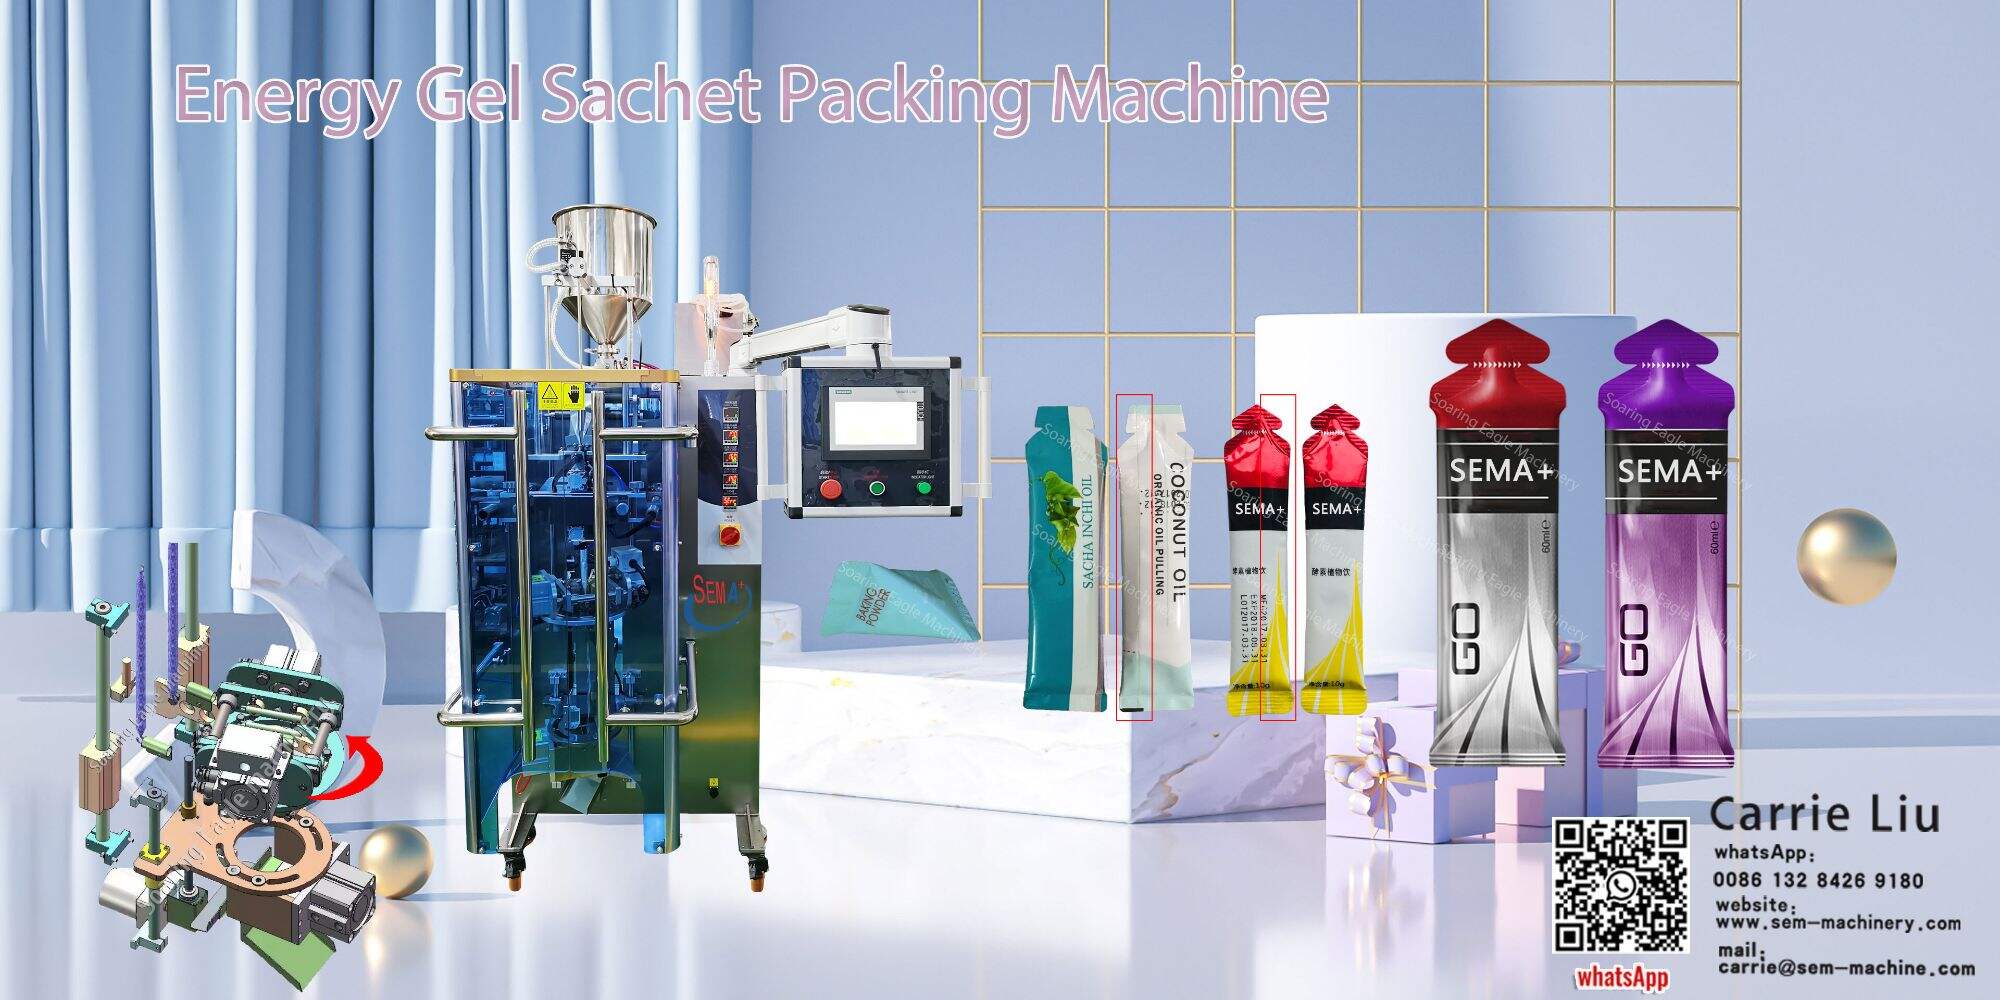 High quality energy gel sachet packing machine